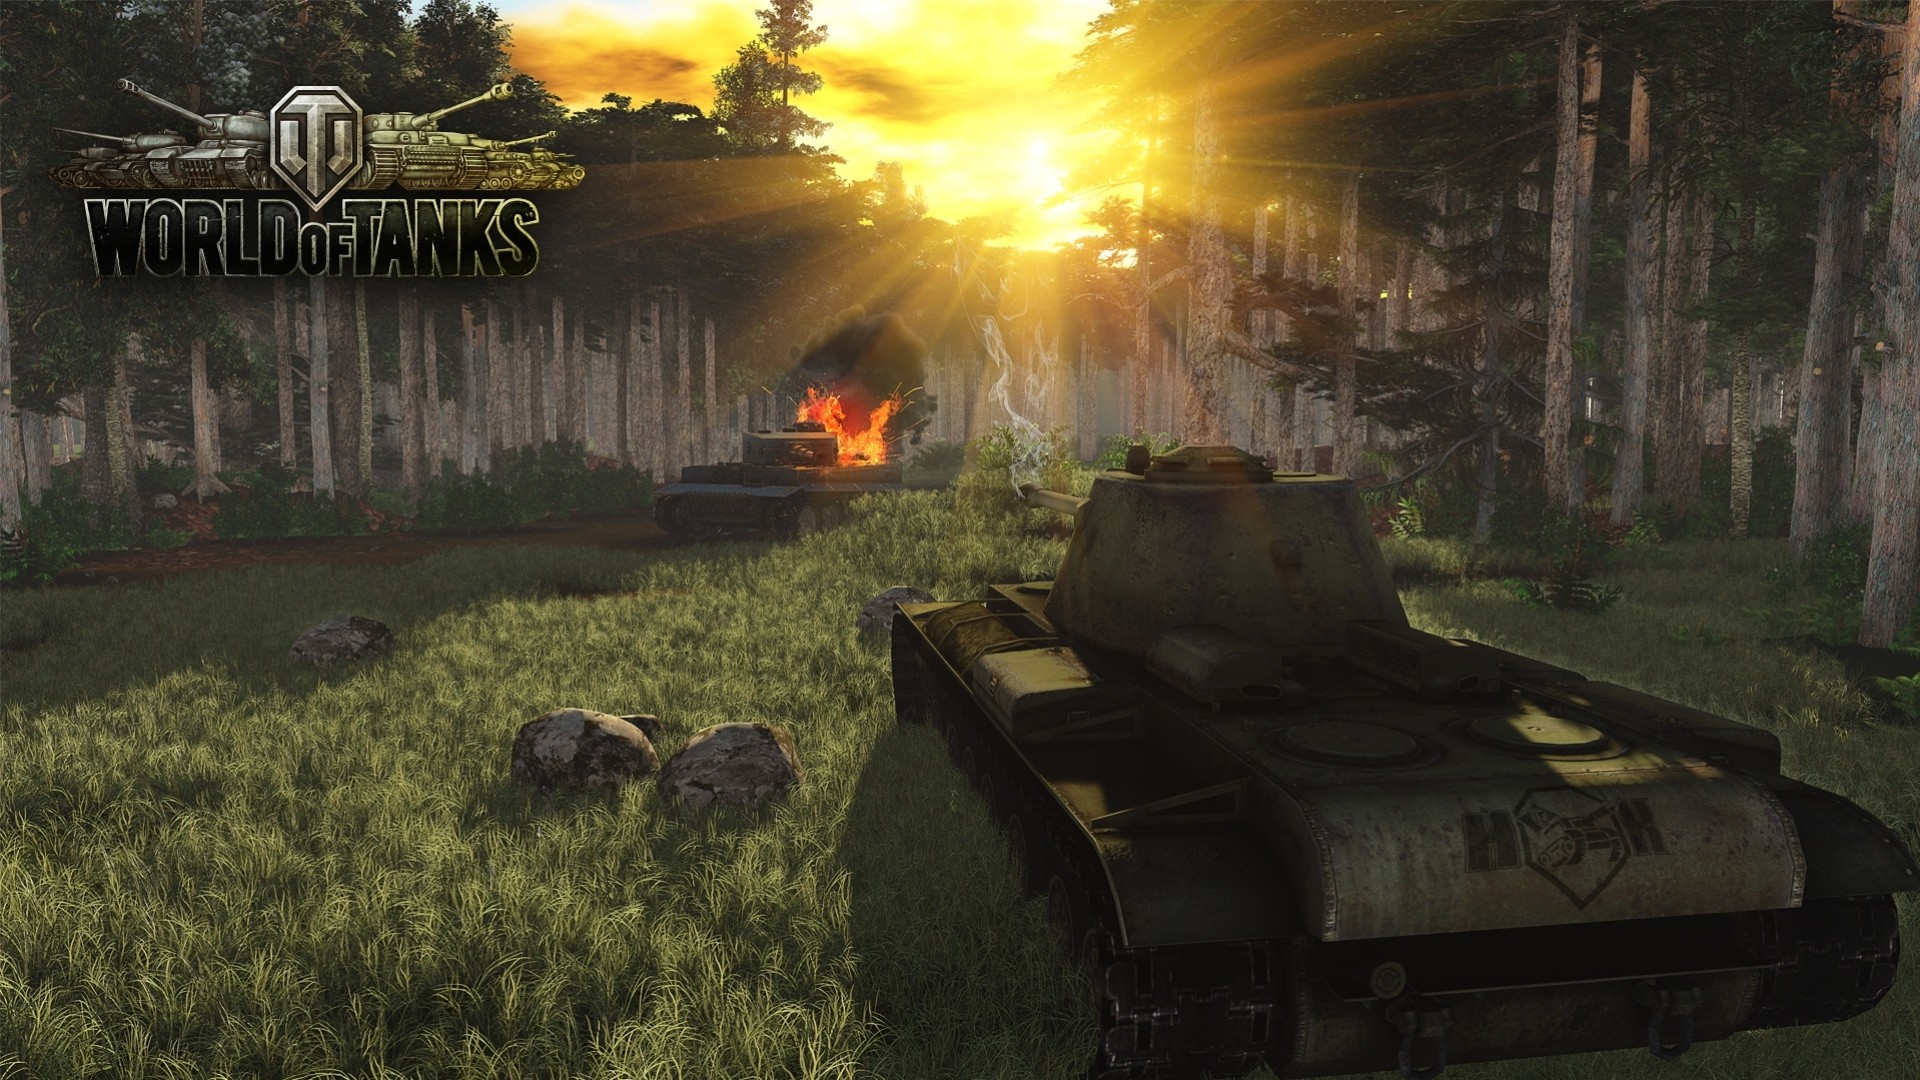 Картинки про игру танки